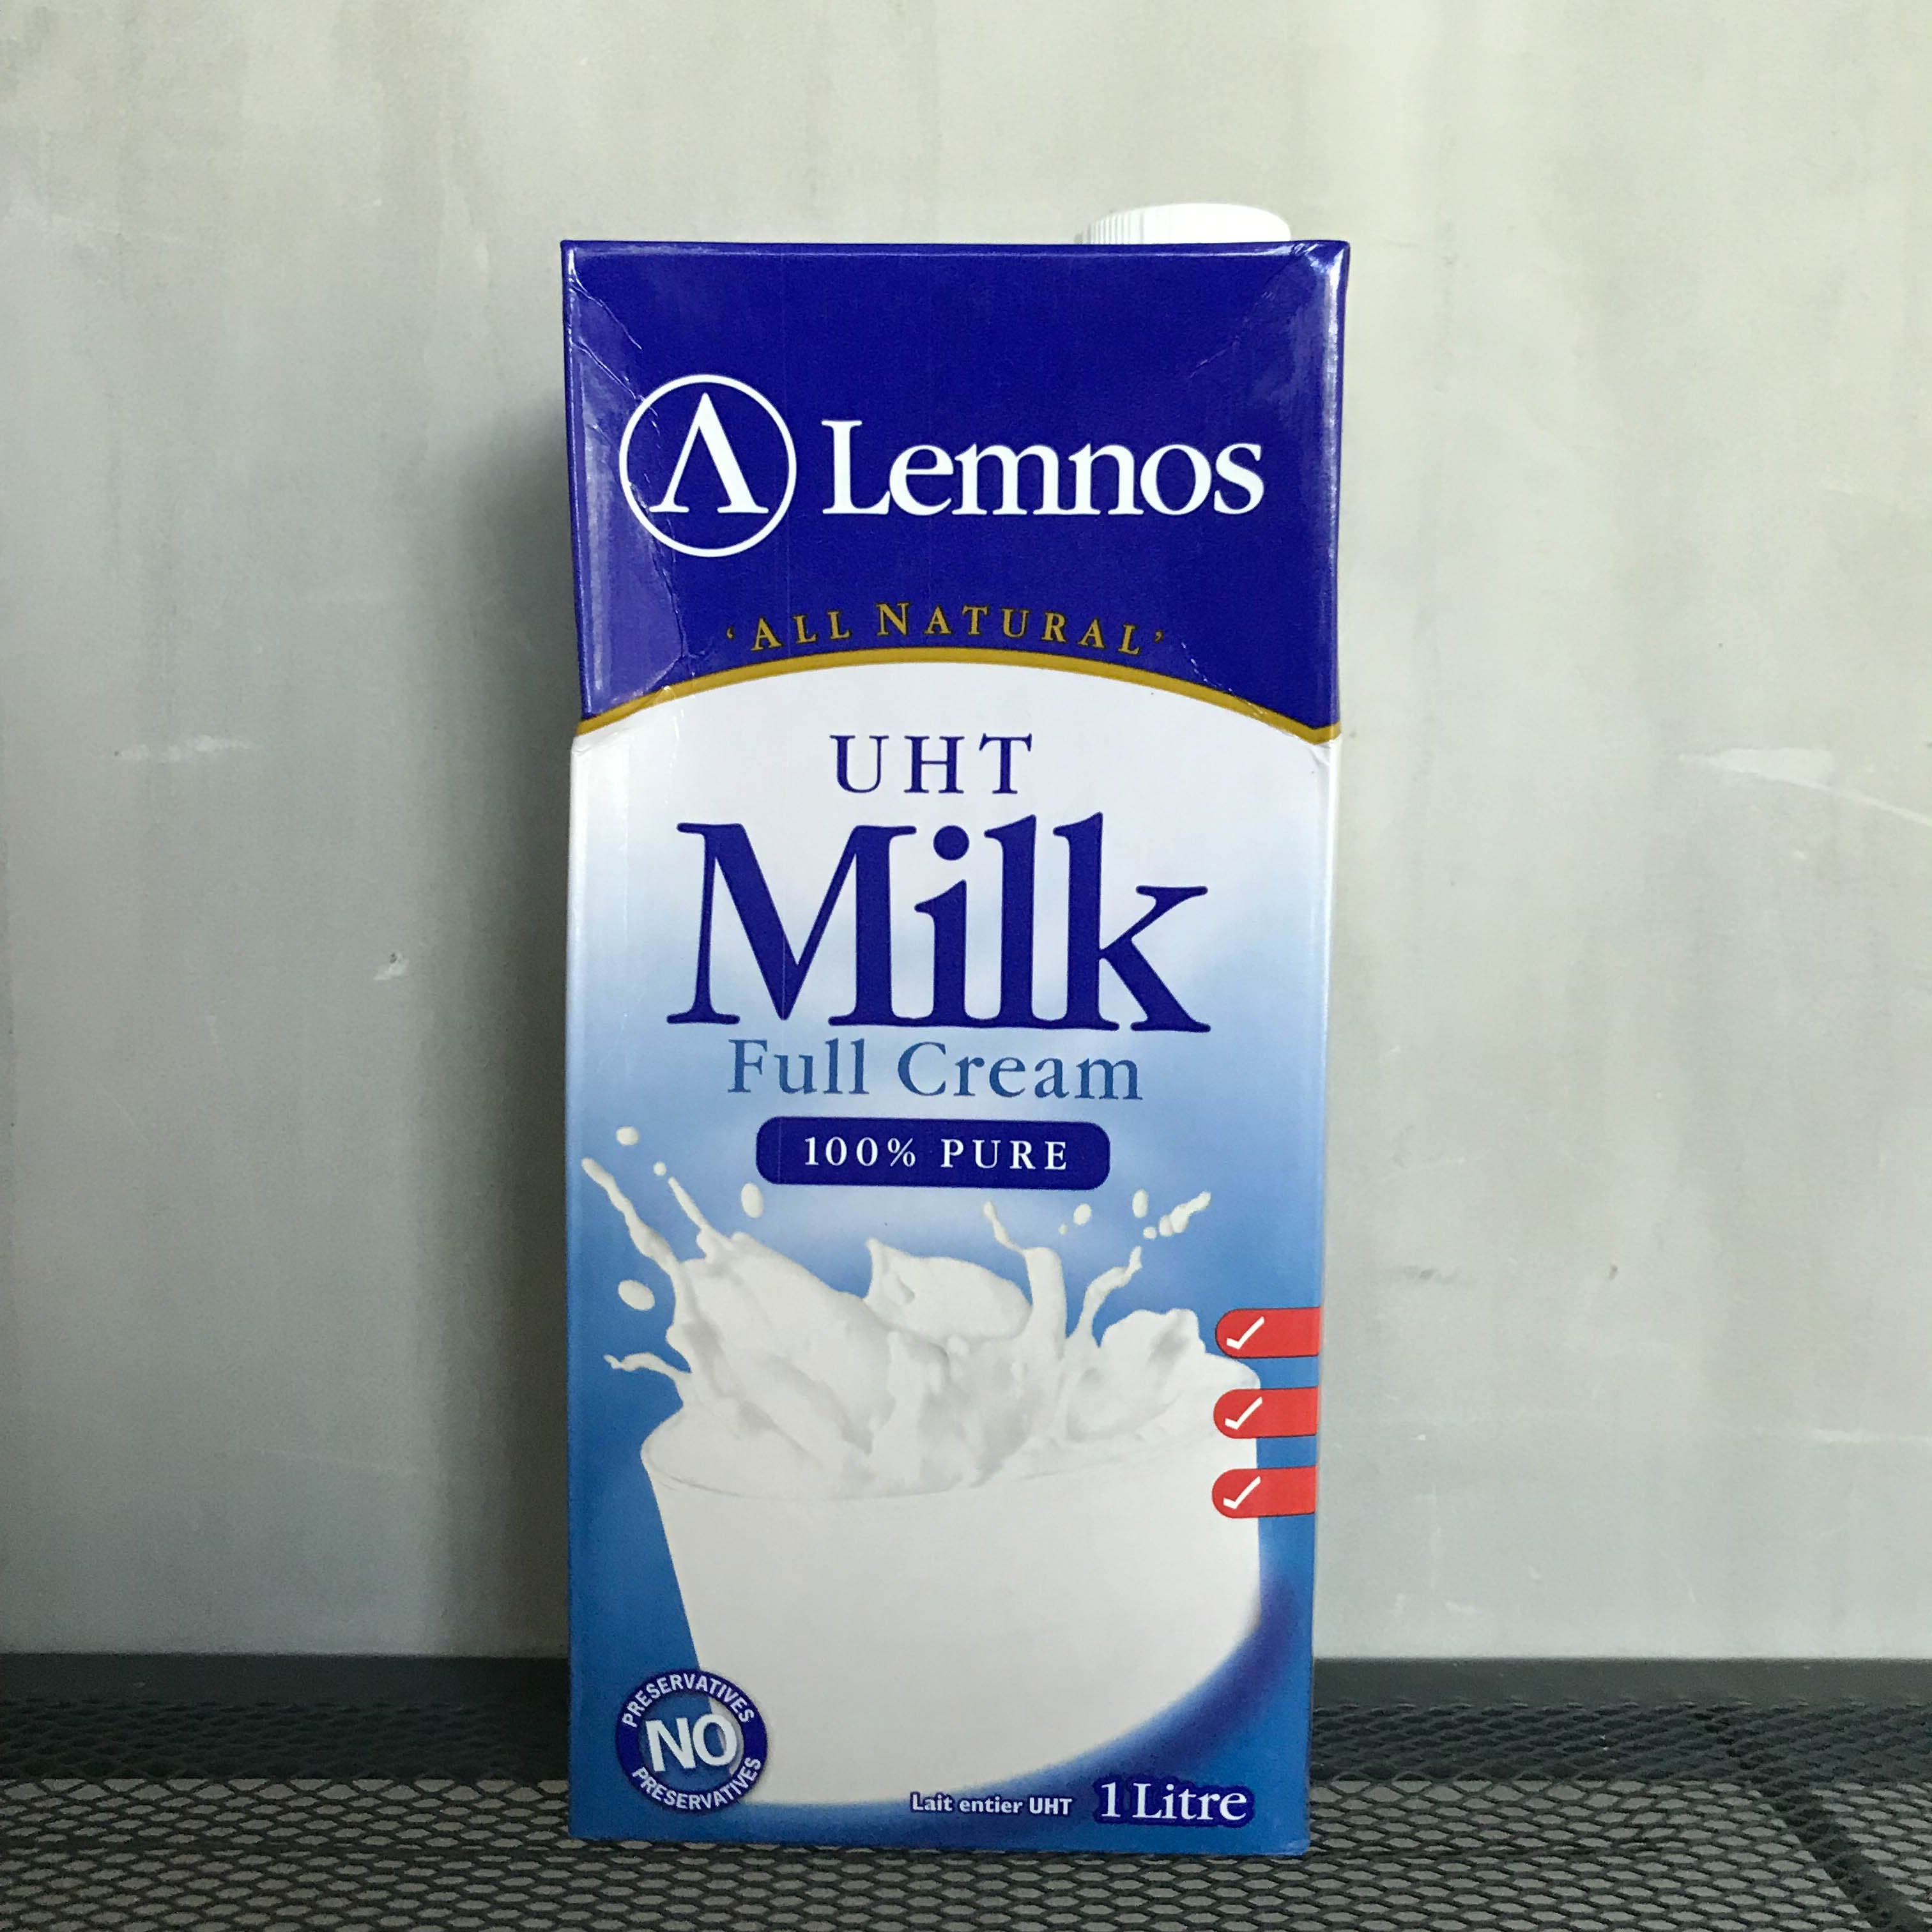 Lemnos UHT Milk (Per Box of 12 Liters)